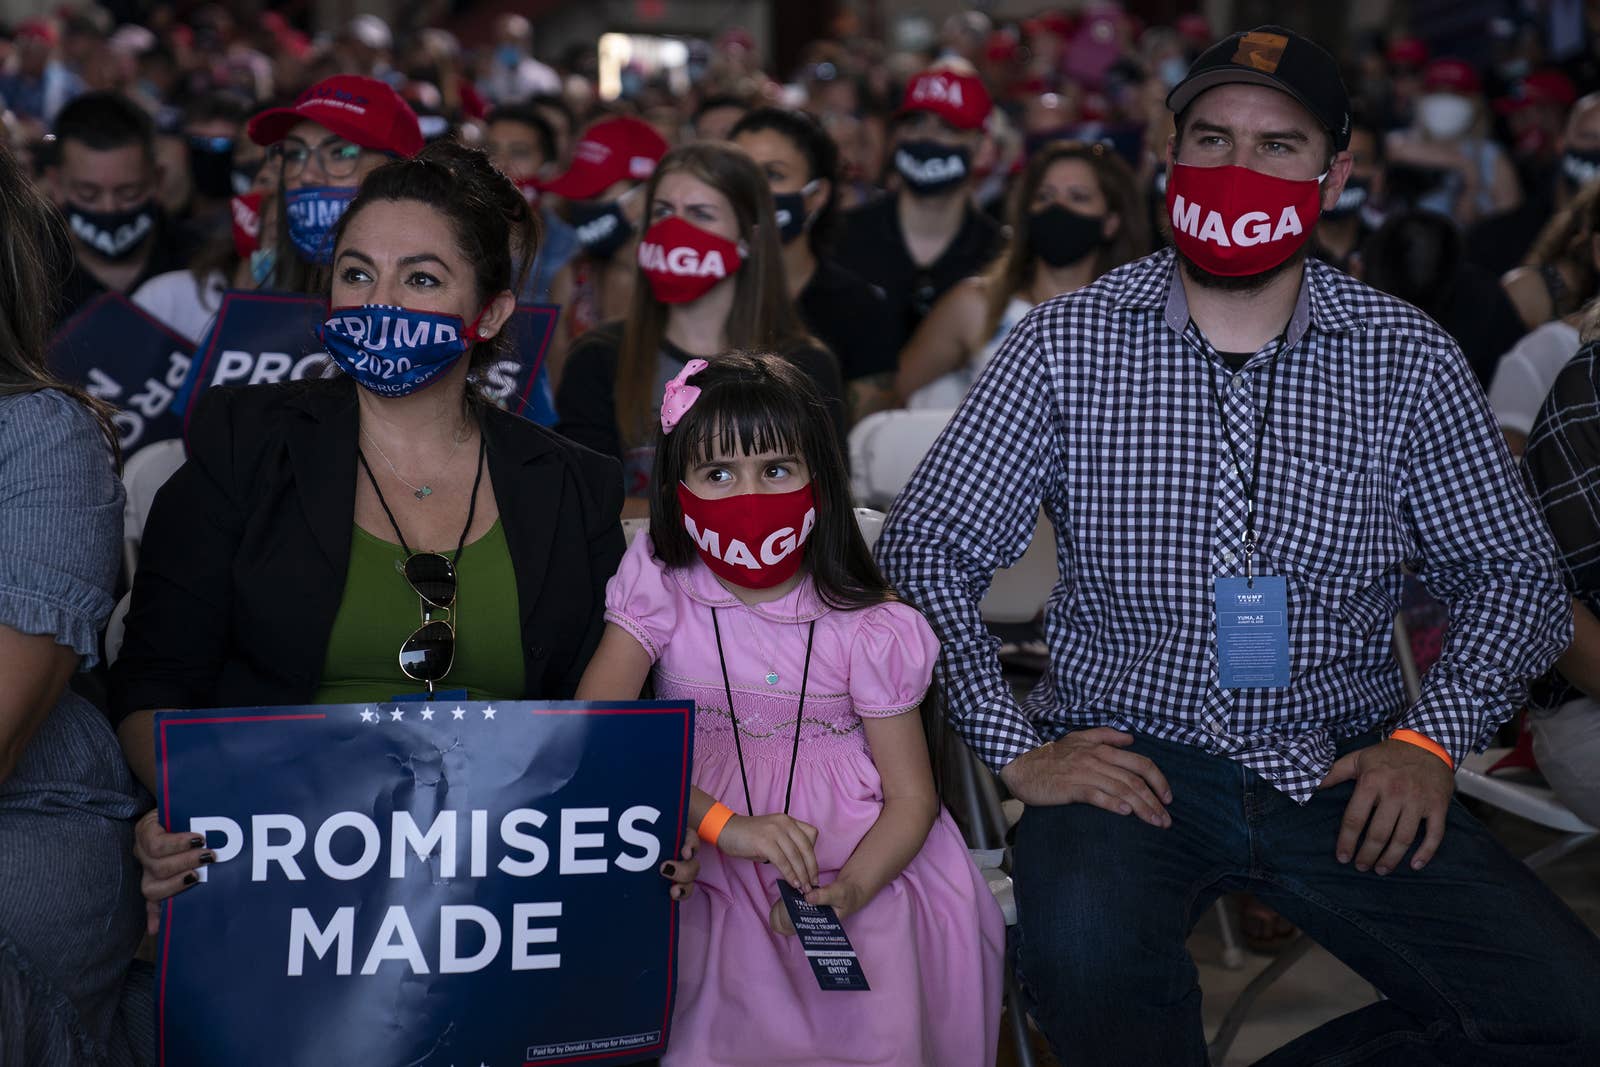 A crowd wearing MAGA masks